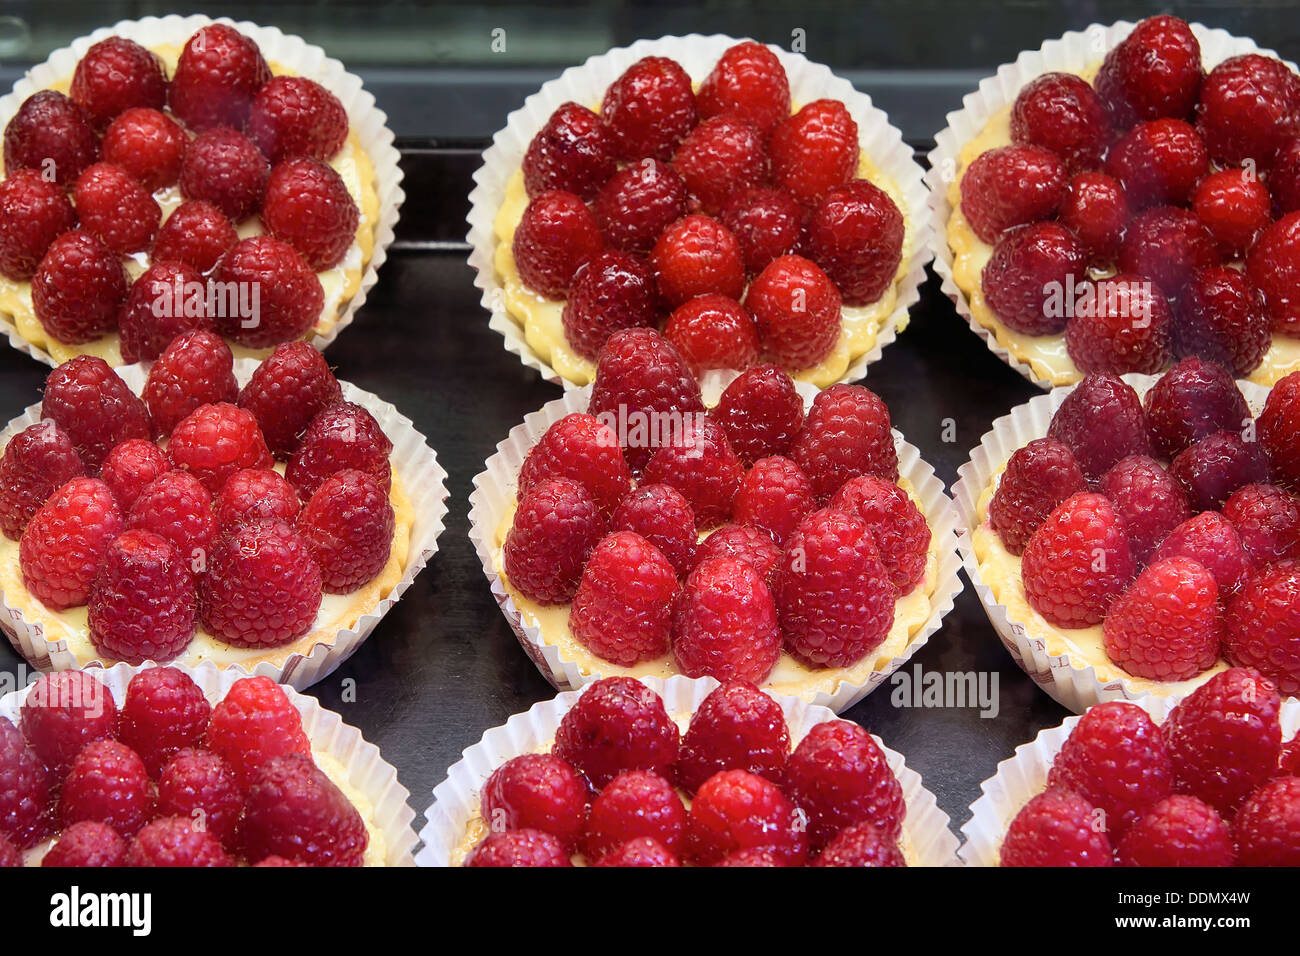 Lemon Curd Fruit Tarts with Raspberries at Bakery Shop Stock Photo